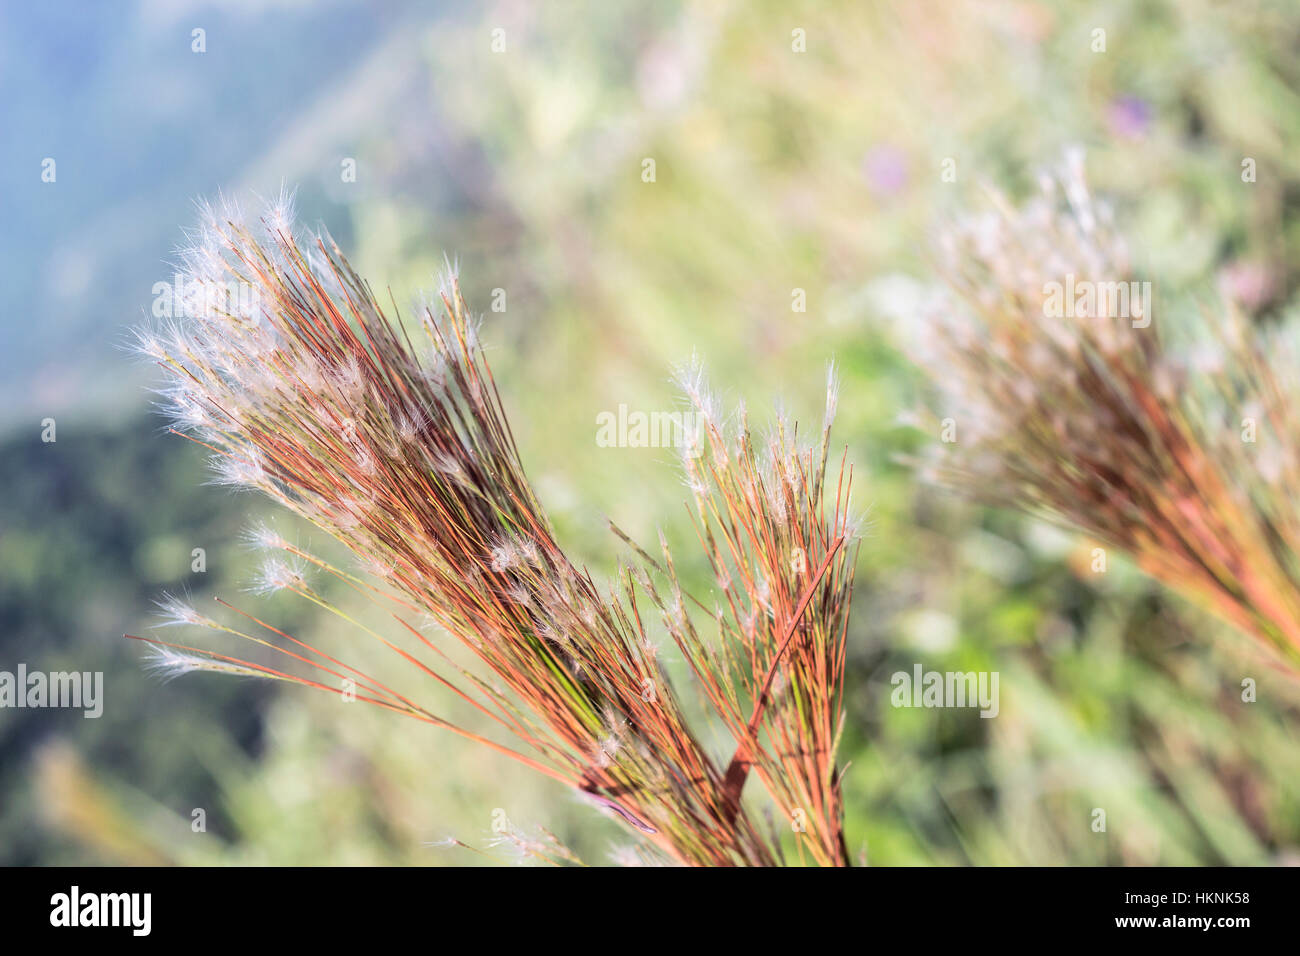 Detail of bright orange grass Stock Photo